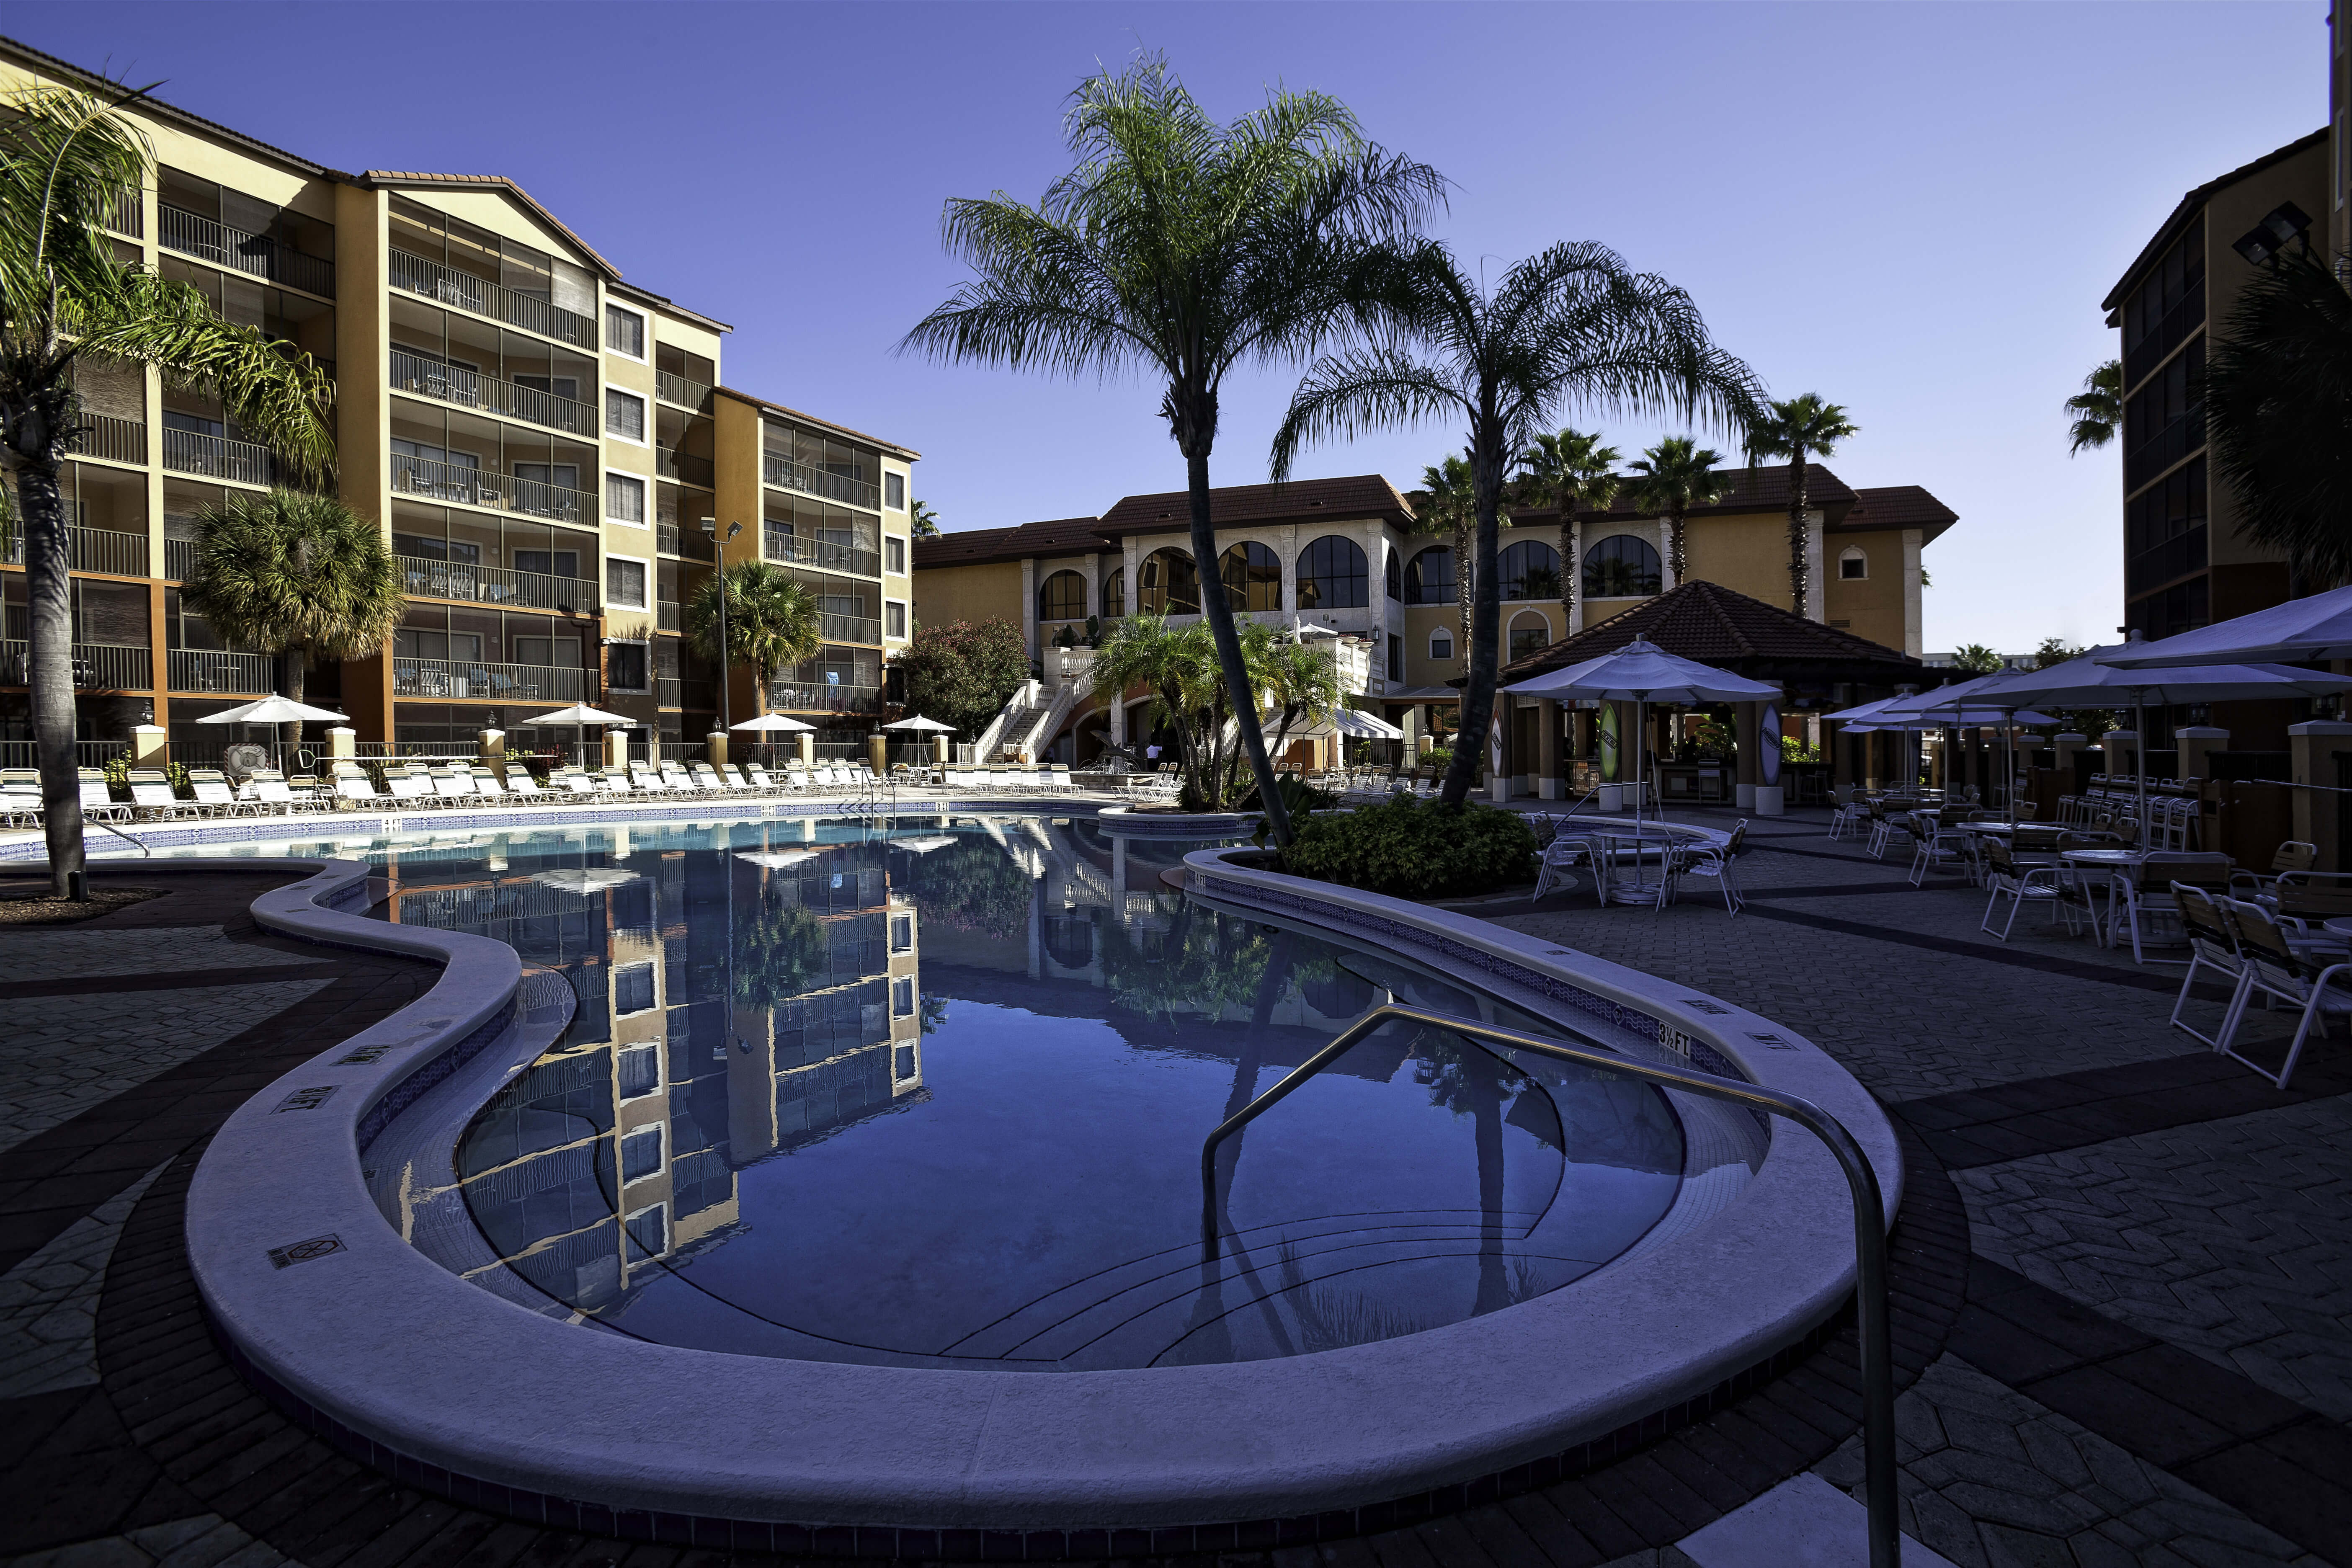 Outdoor Pool in Late Afternoon | Westgate Lakes Resort & Spa | Orlando, FL | Westgate Resorts